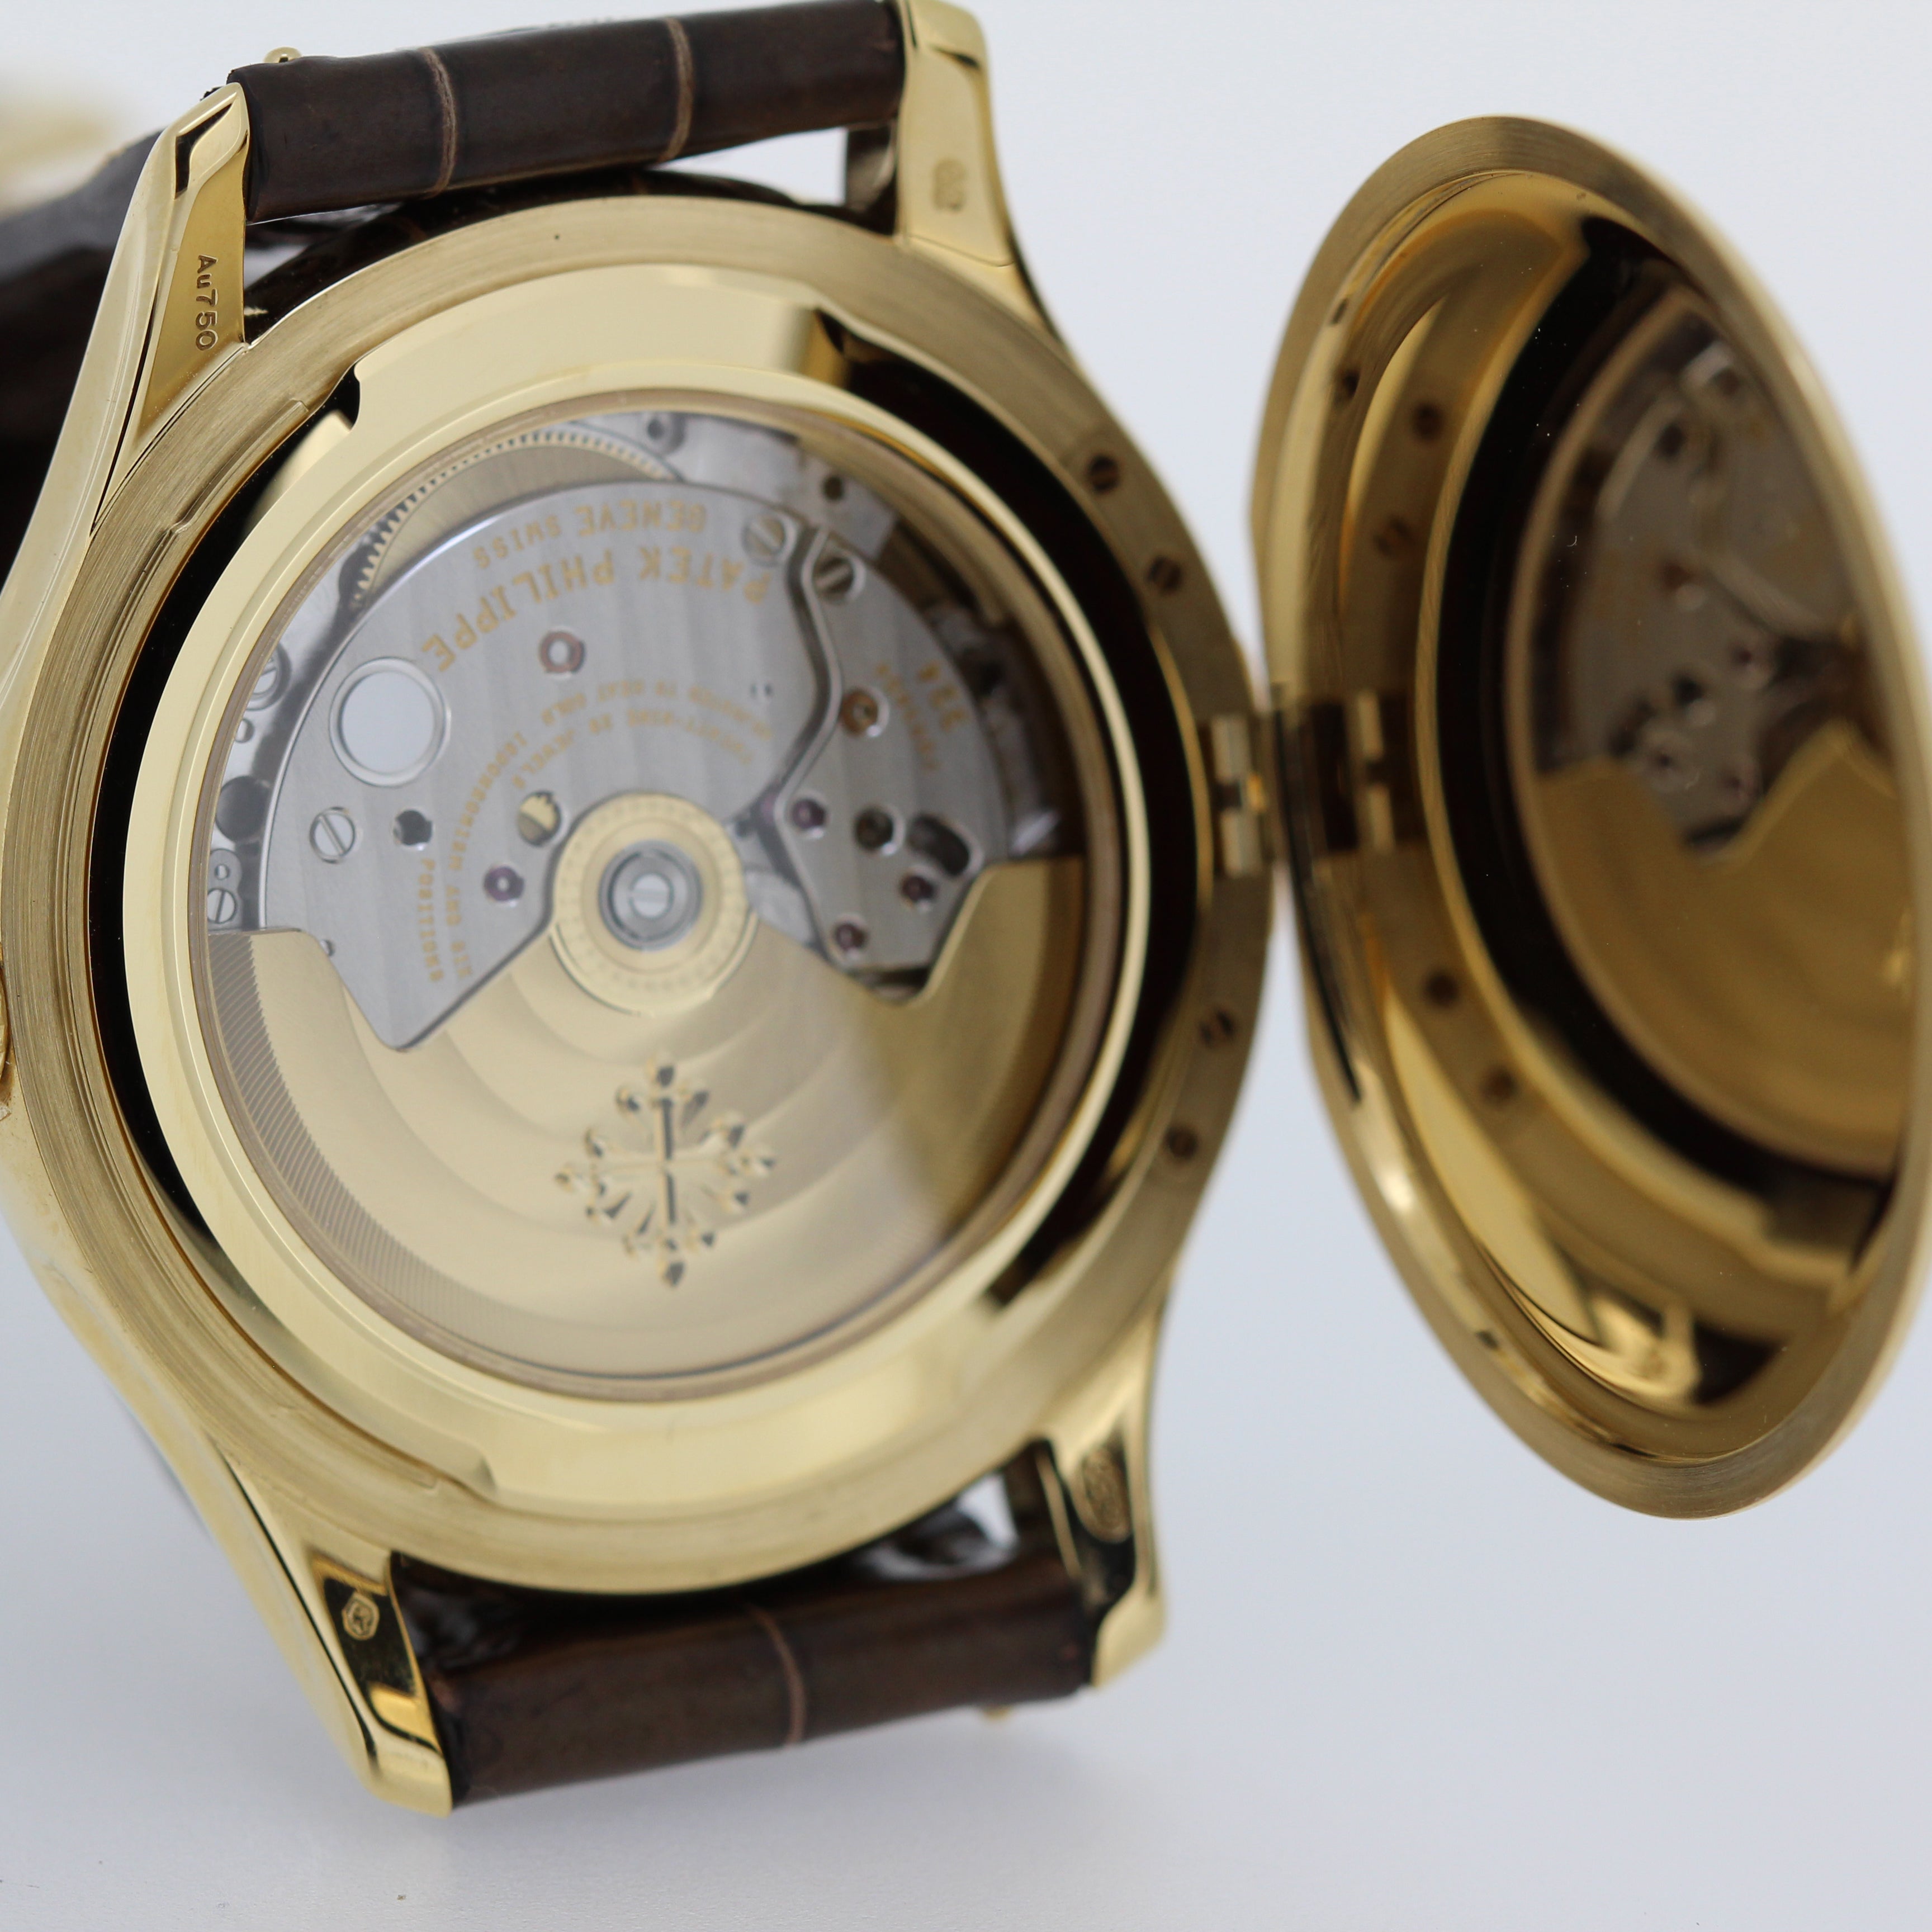 Patek Philippe  Calatrava Date Yellow Gold Watch 5227J-001